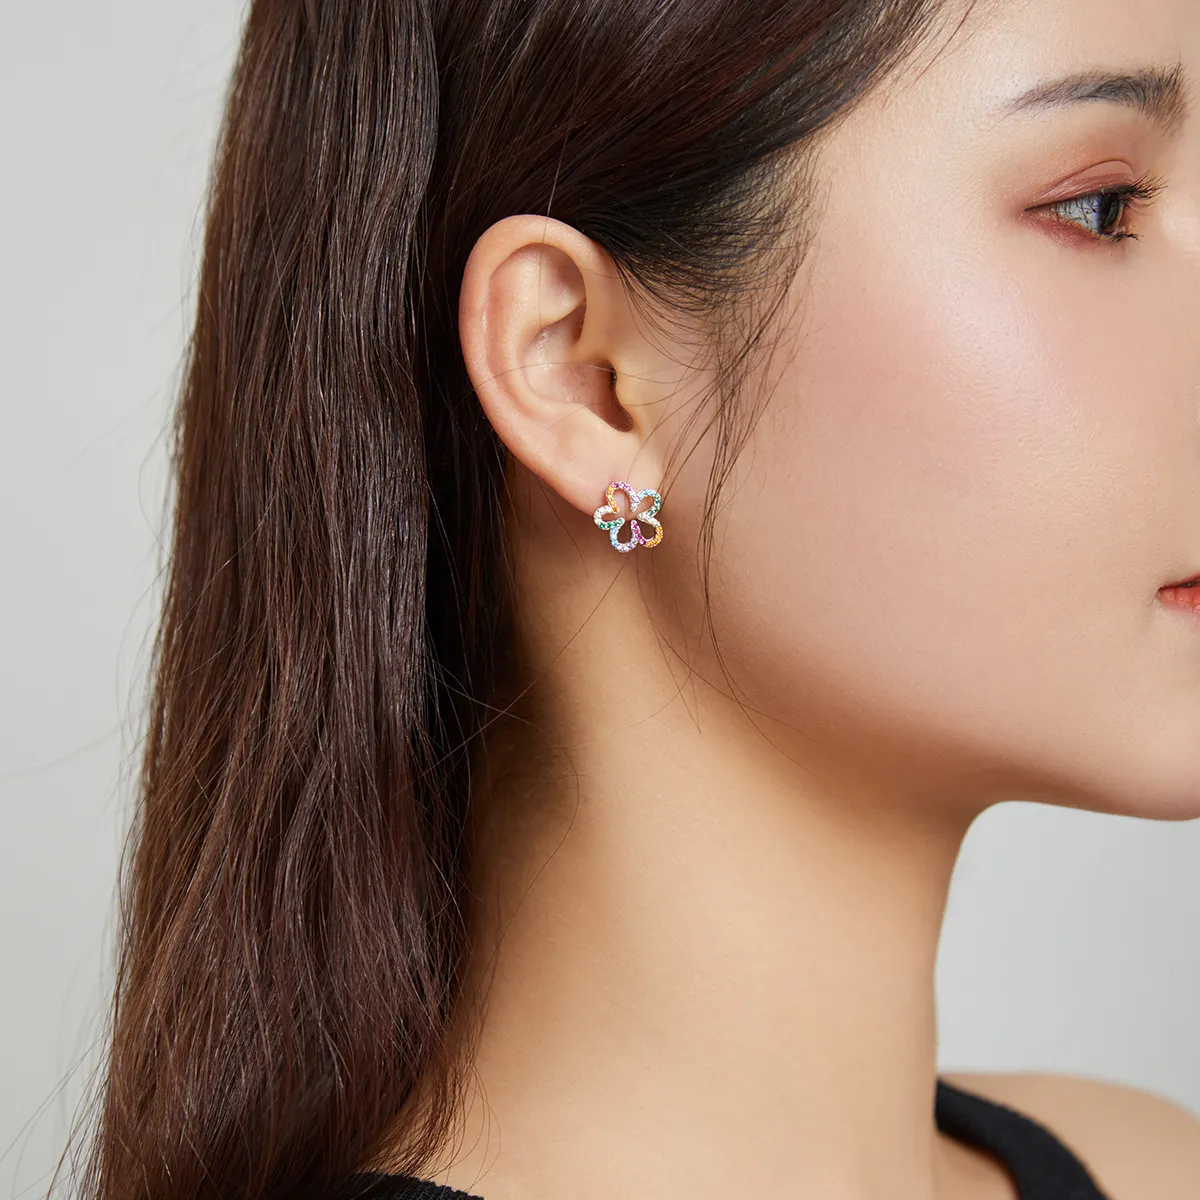 Pandora Style Seven-Colored Flowers Stud Earrings - BSE487